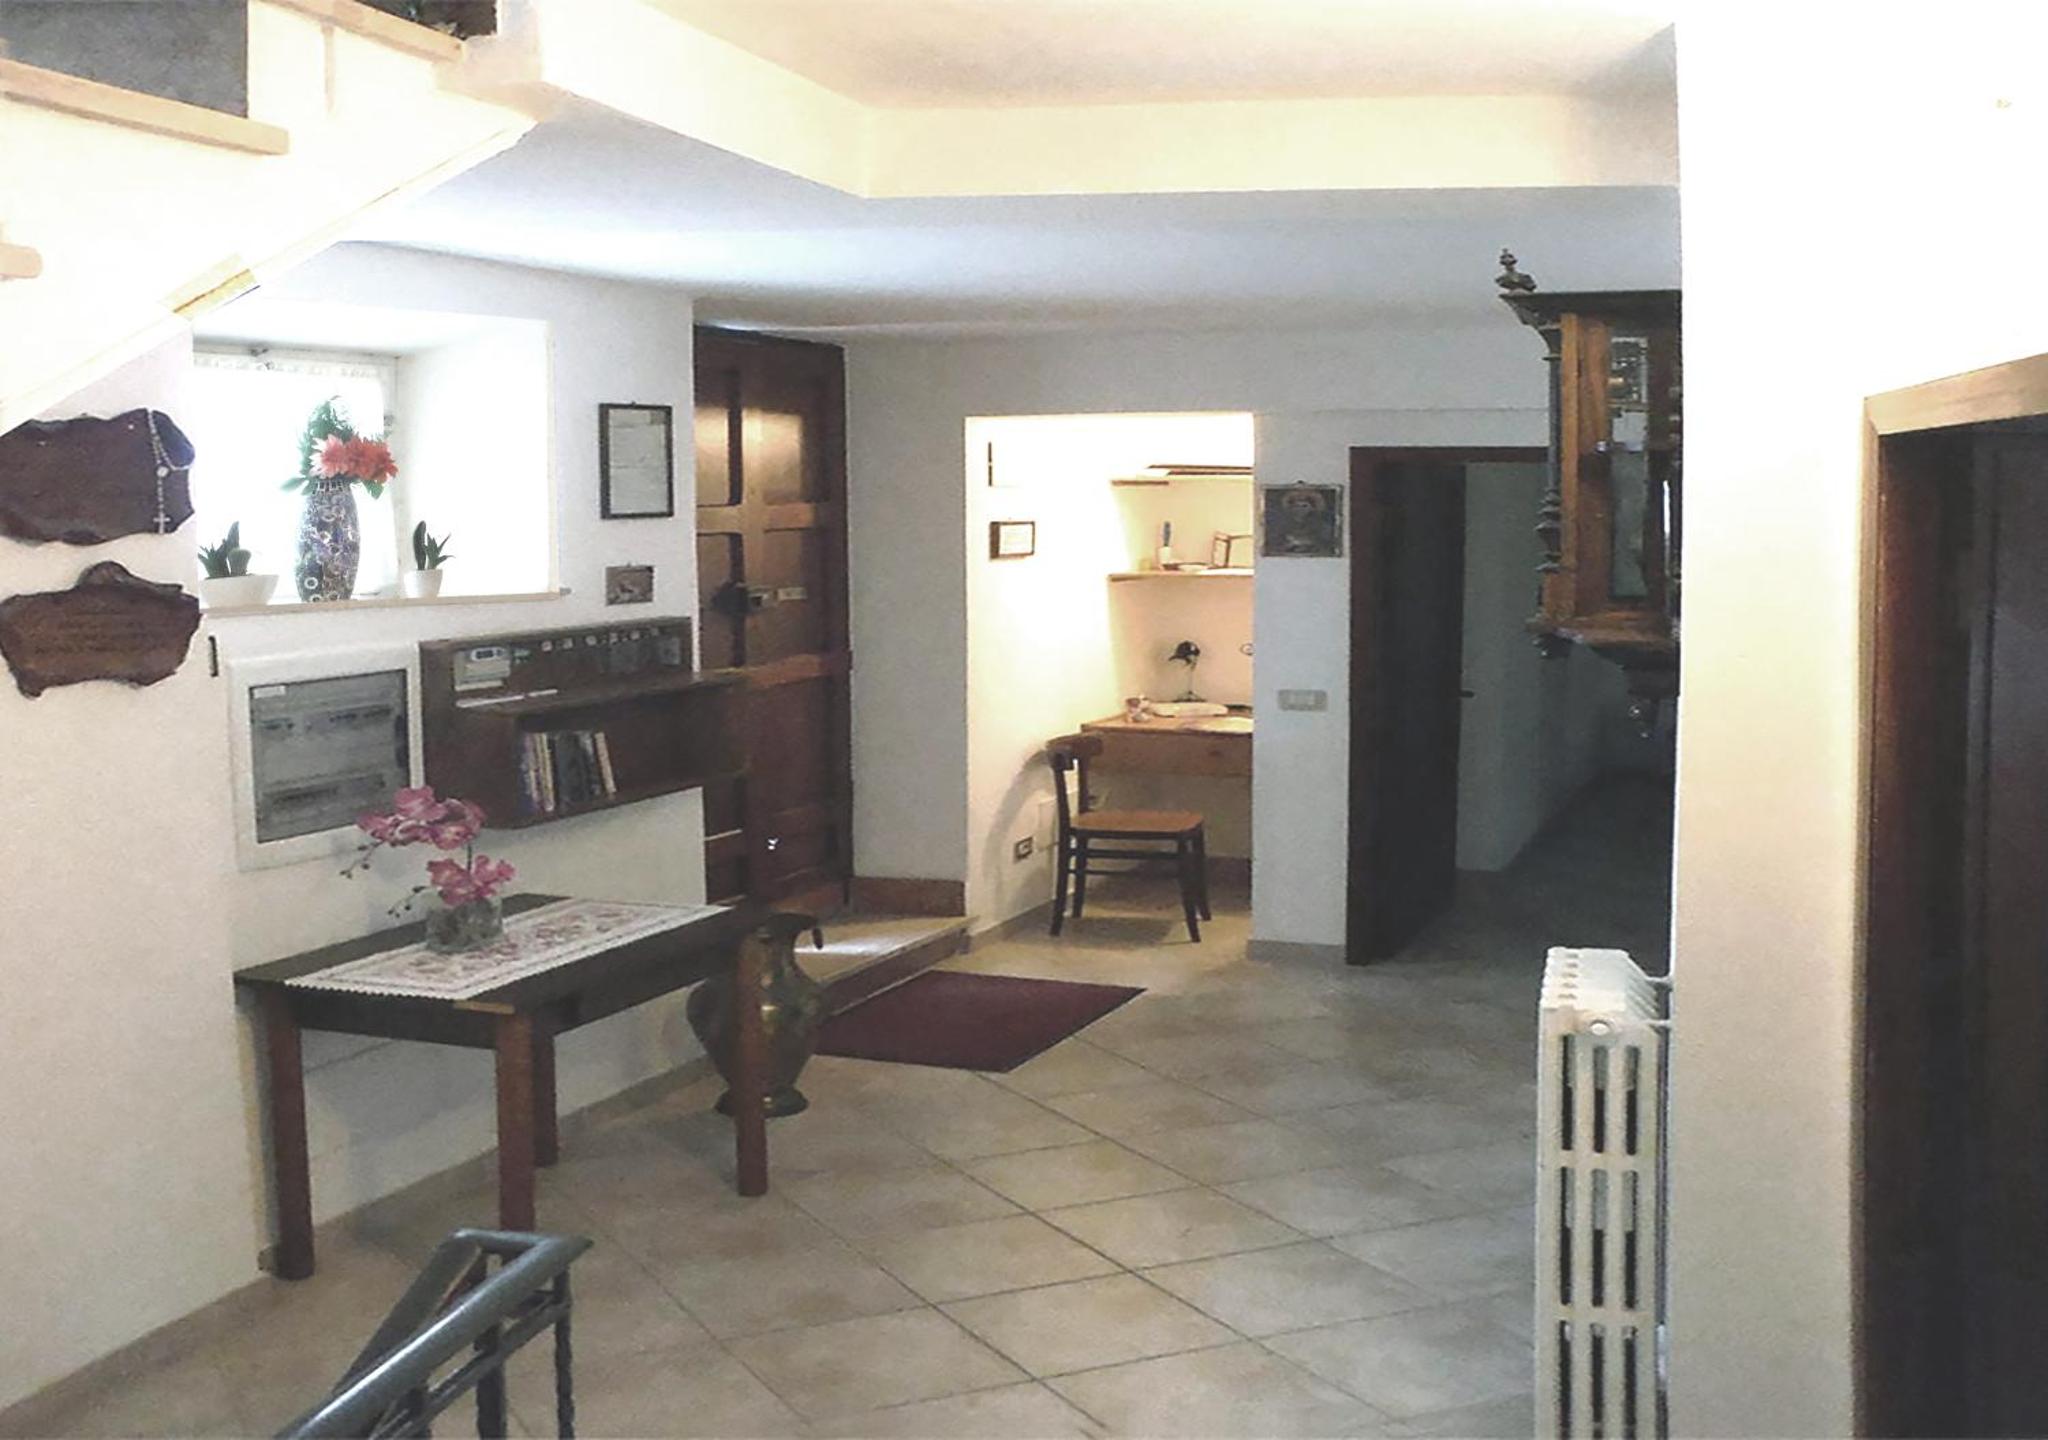 Camere Gambacorta Assisi